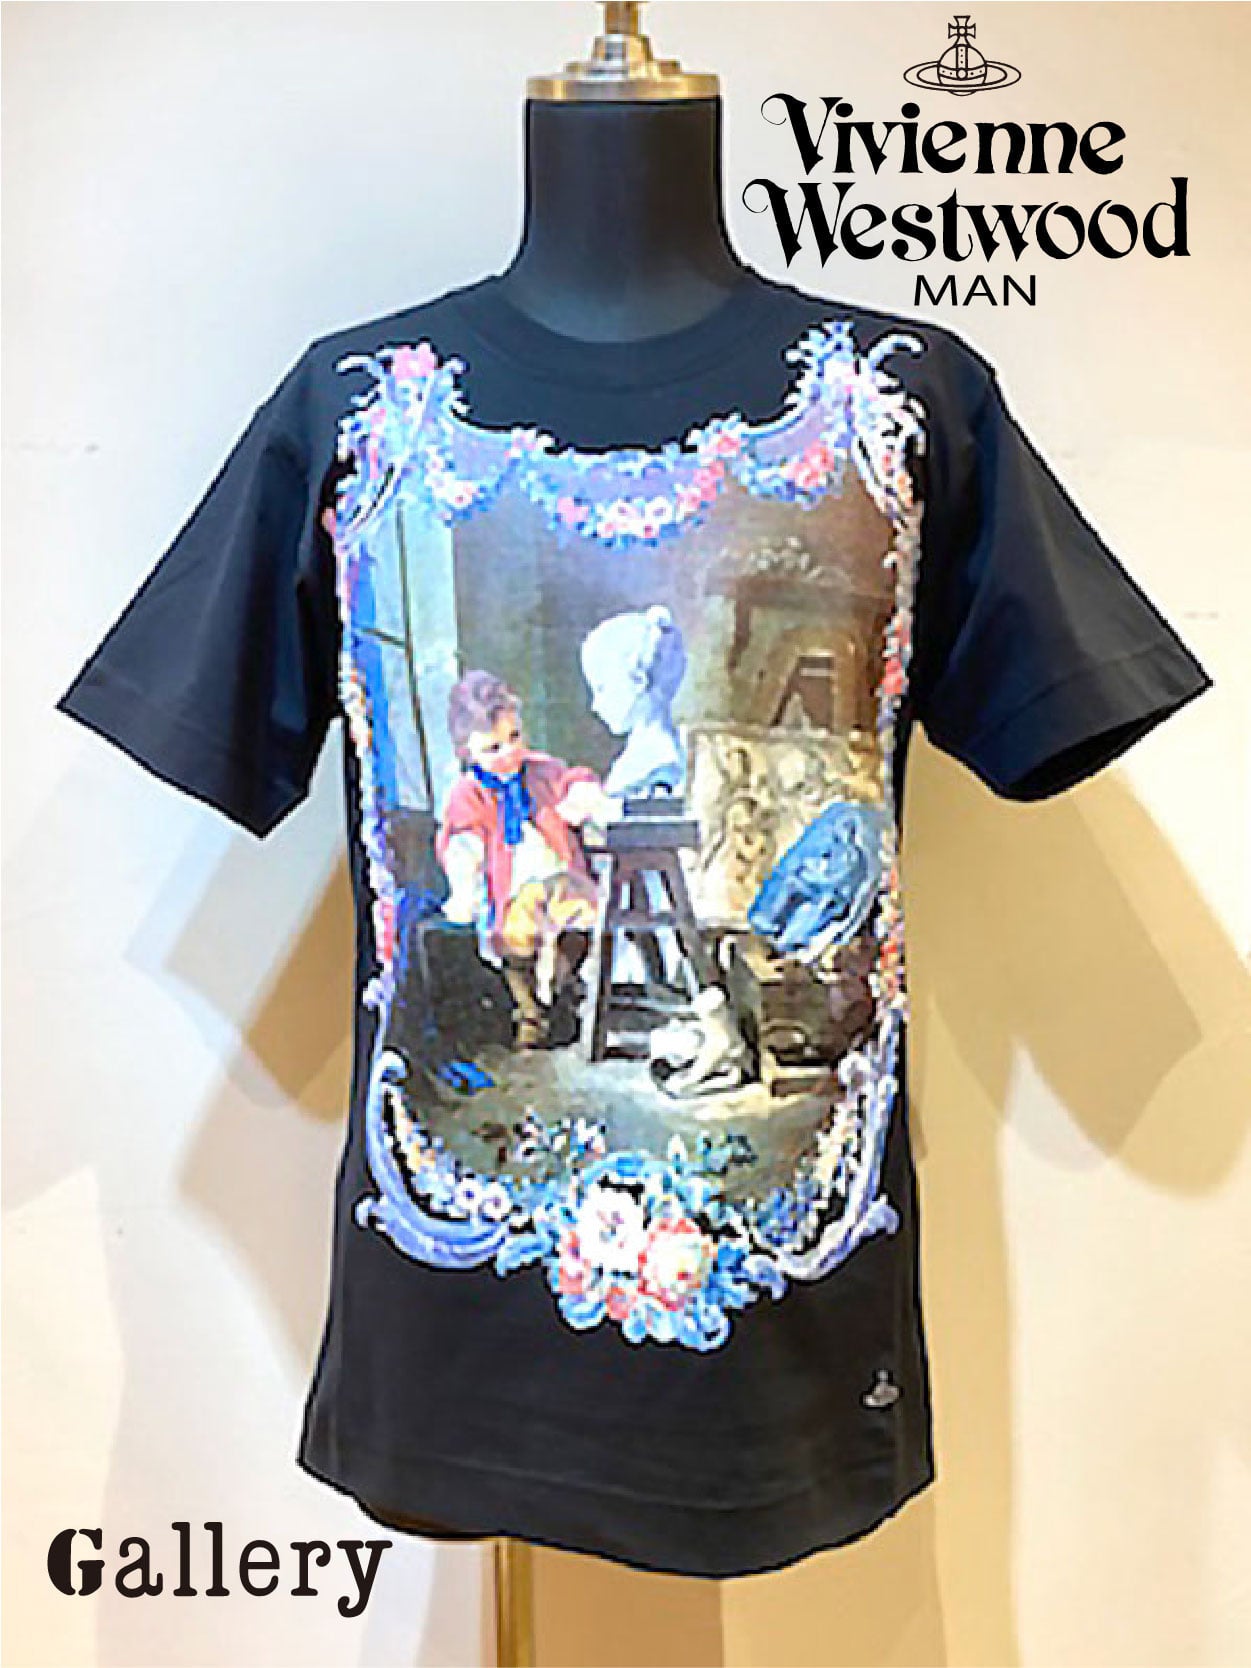 ◇ Vivienne Westwood プリントTシャツが入荷致しました。 | Gallery 